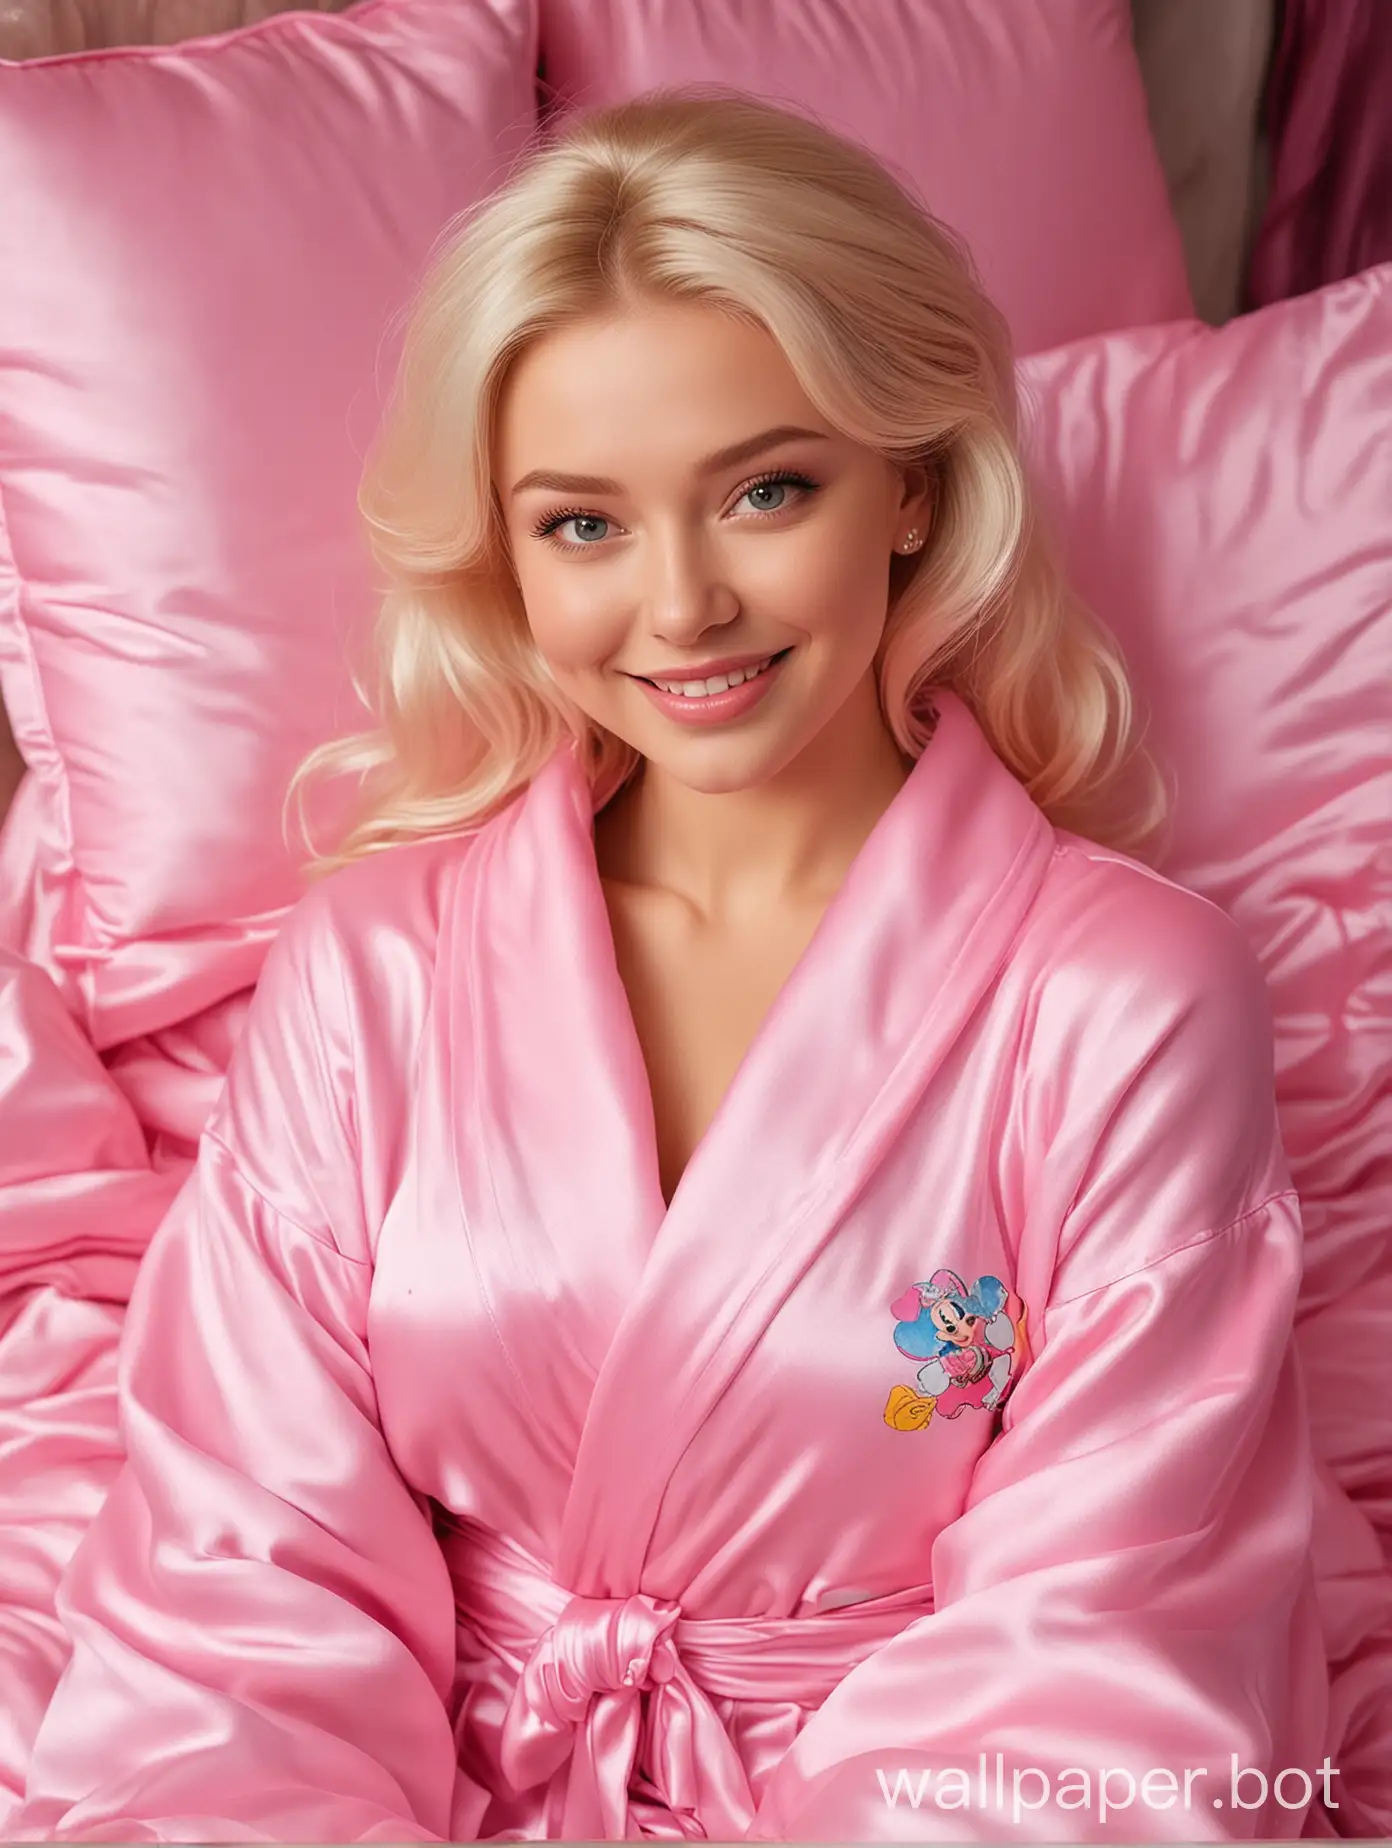 Russian-Sweet-Alyonushka-Smiling-in-Pink-Silk-Robe-Cozy-Relaxation-Scene